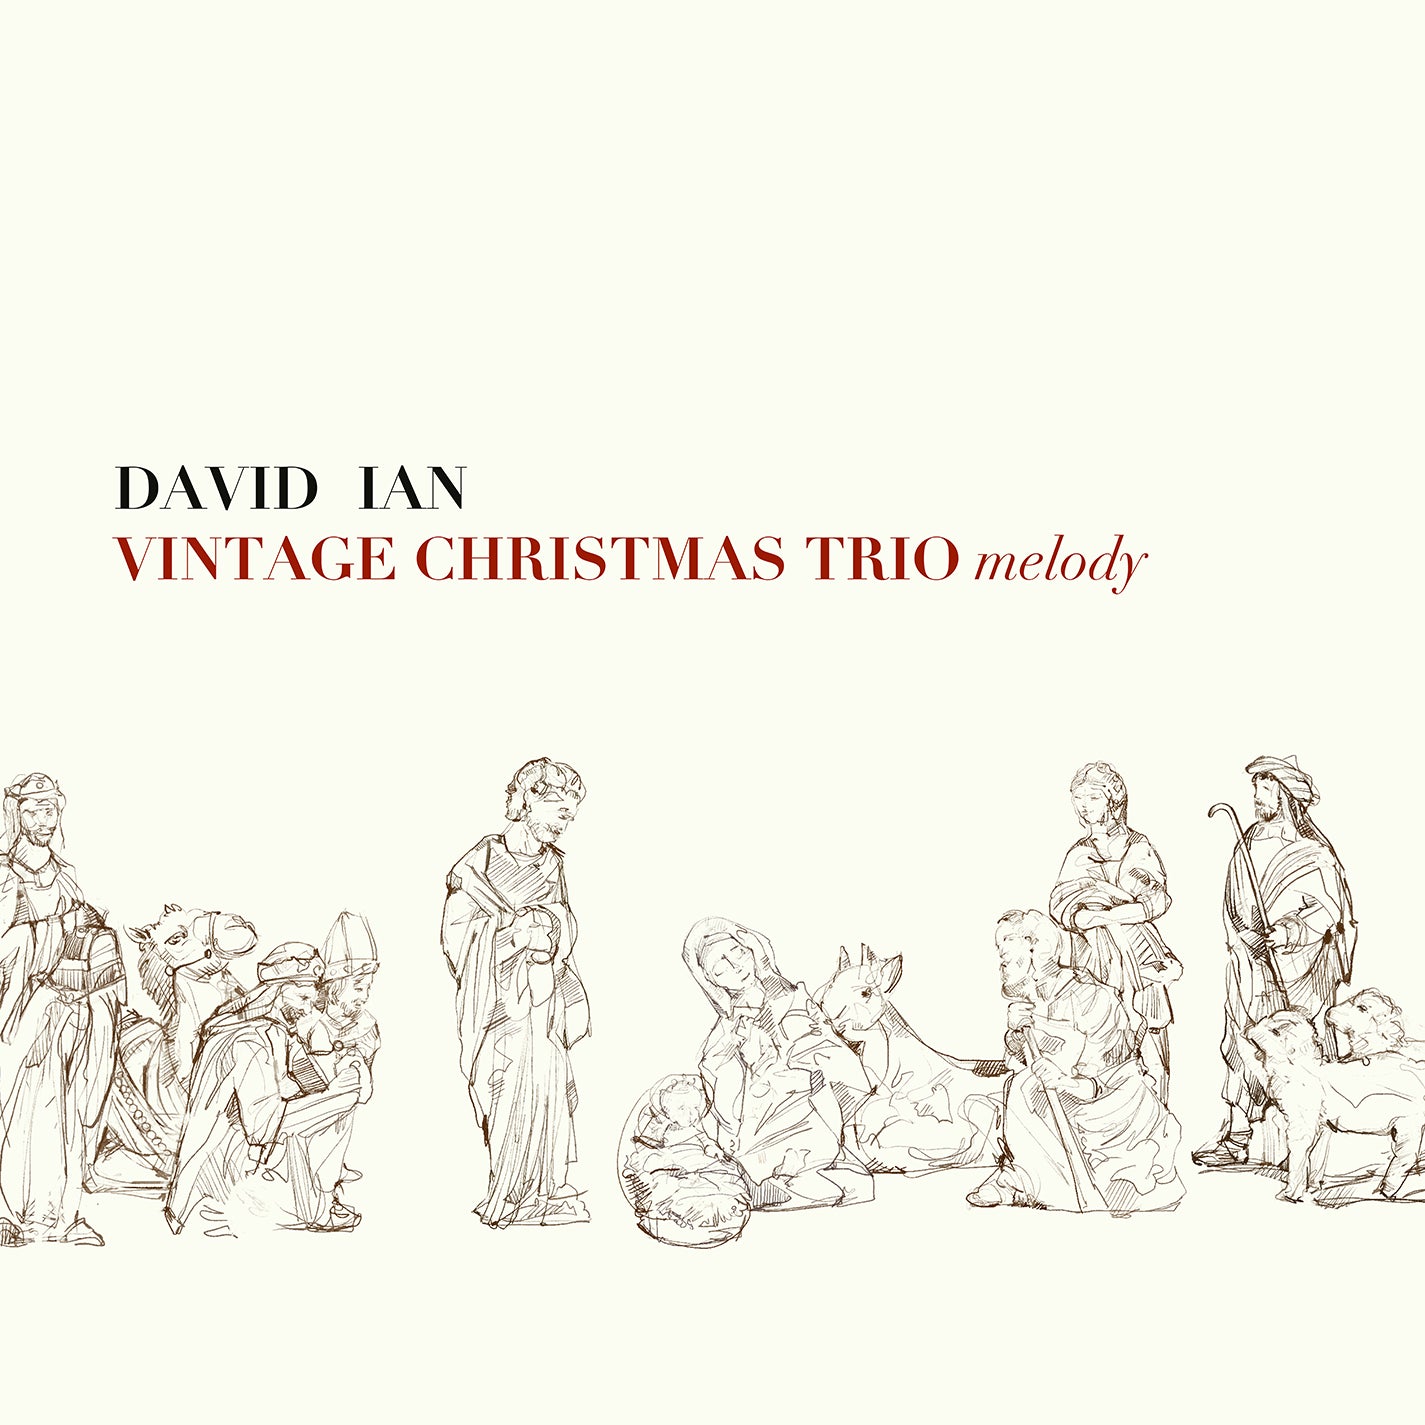 Vintage Christmas Trio Melody / David Ian